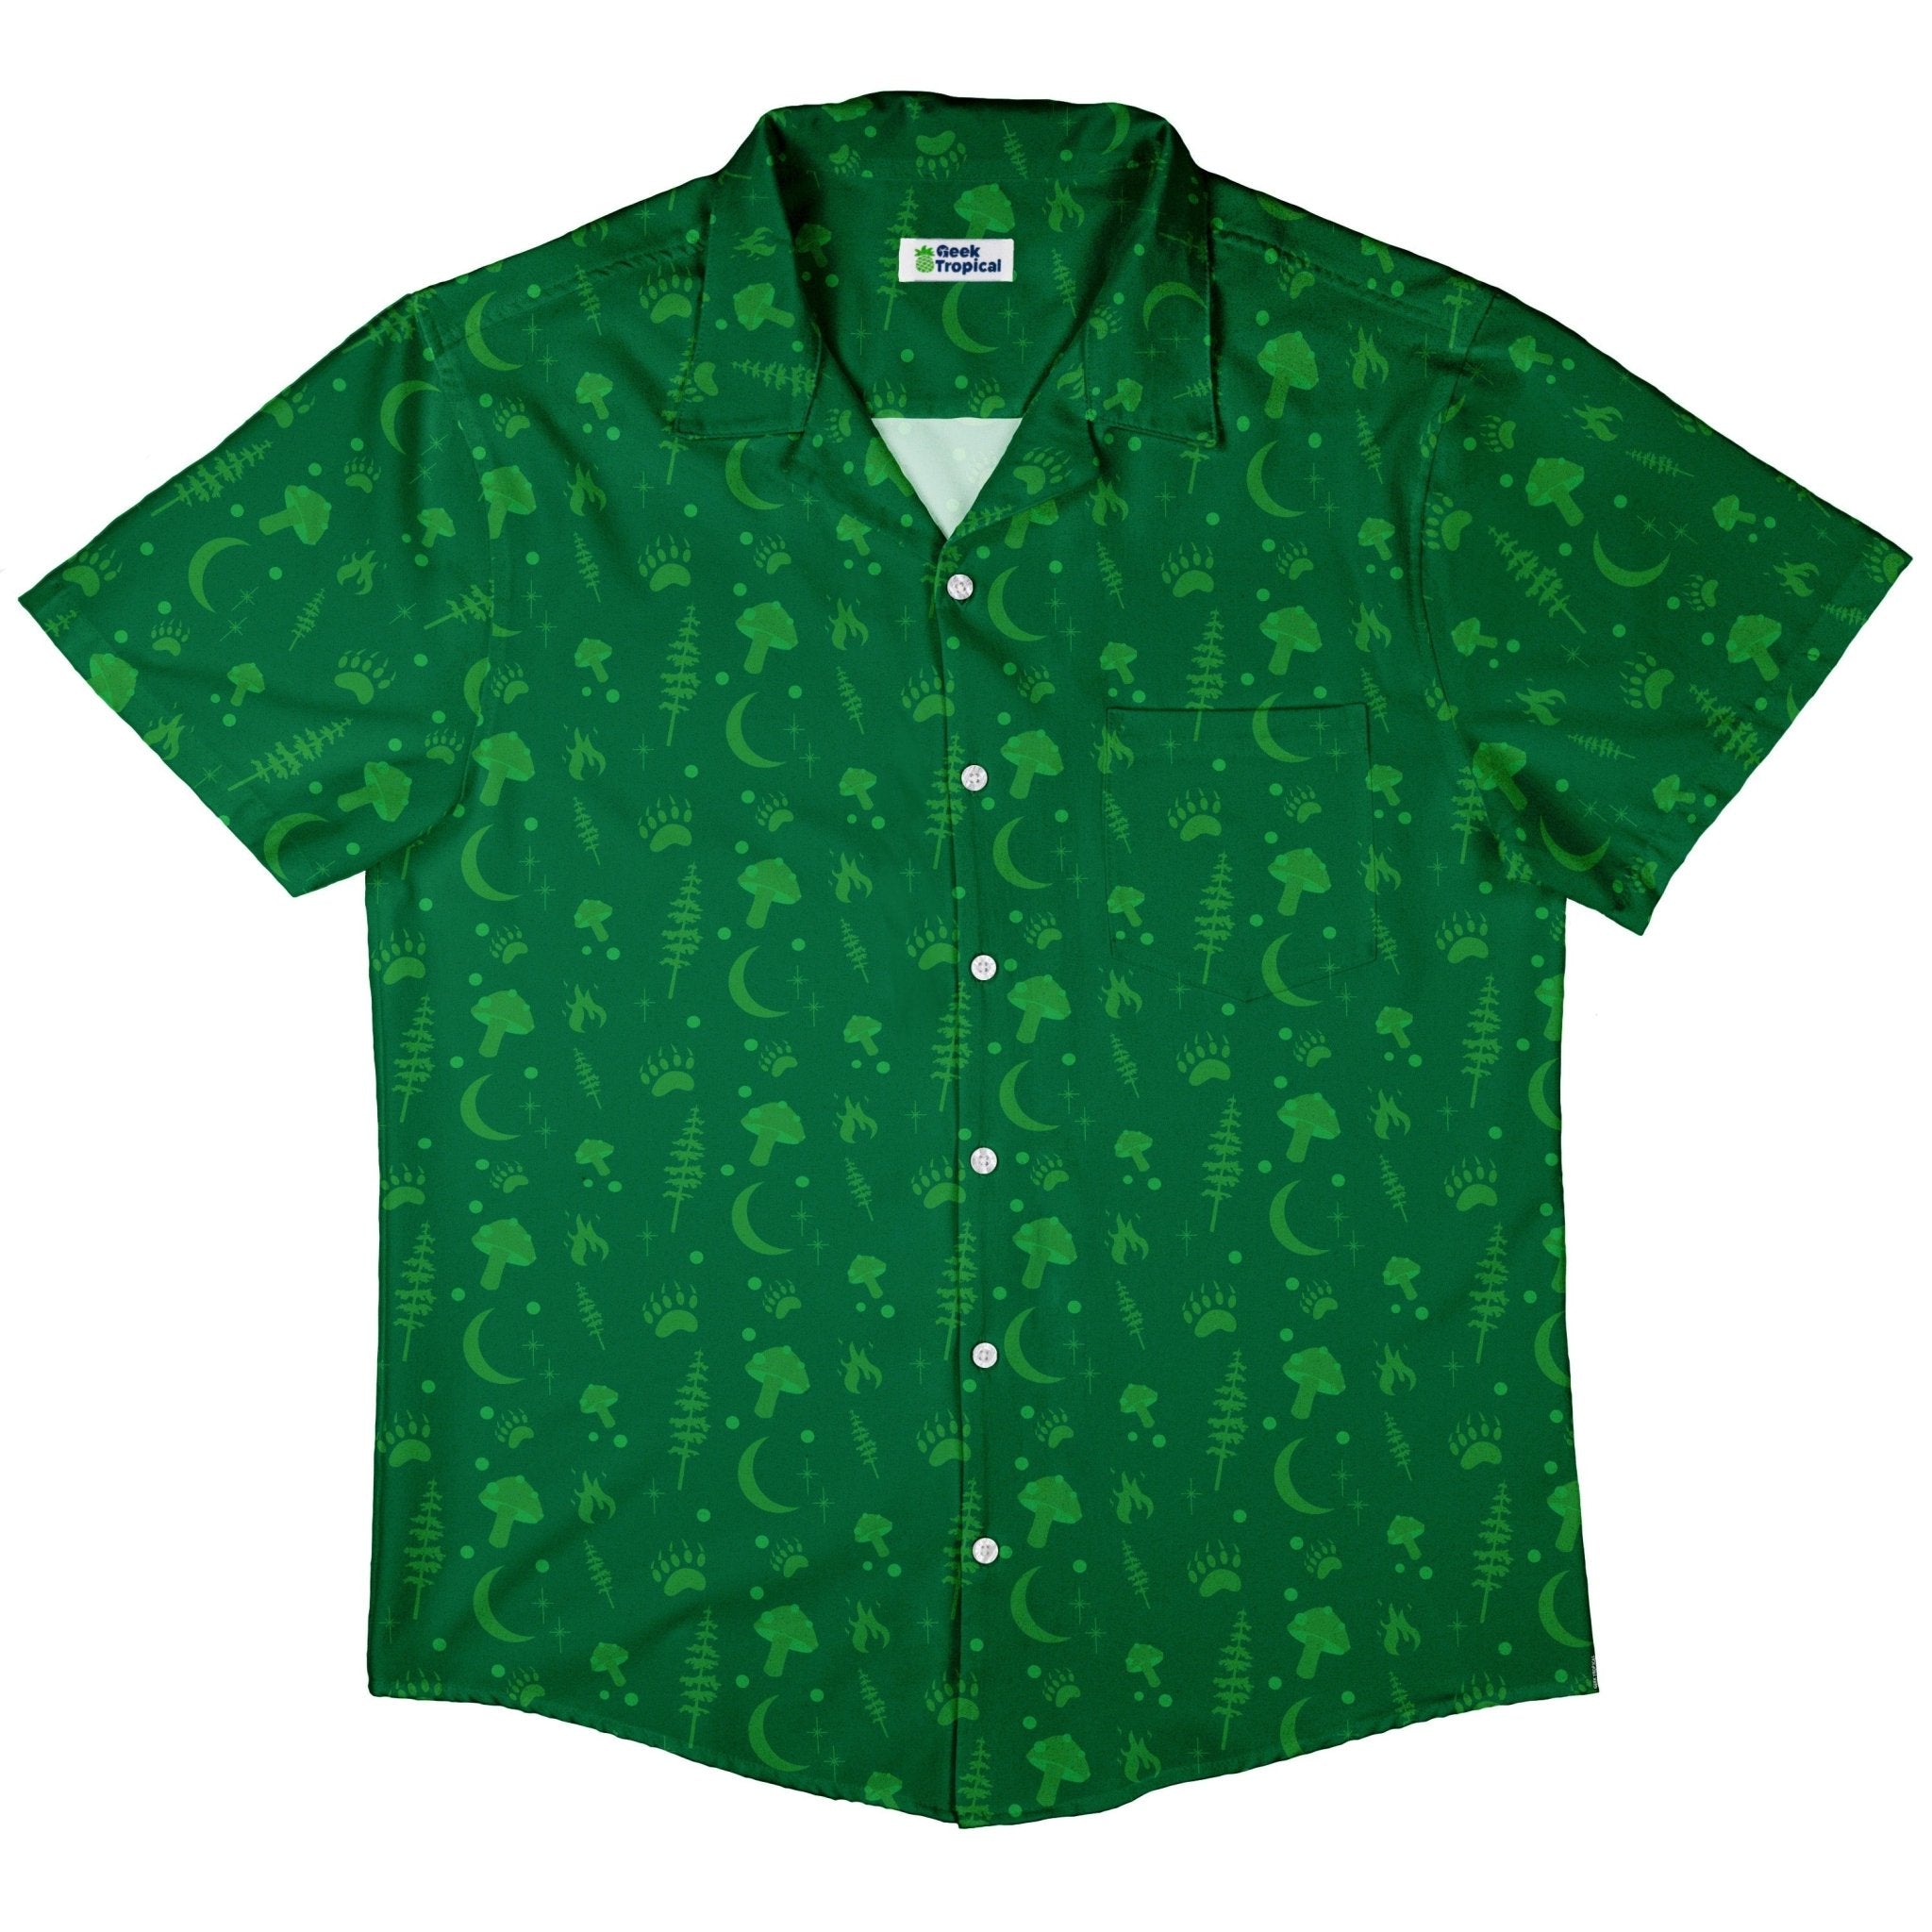 Dnd Druid Class Button Up Shirt - adult sizing - Design by Heather Davenport - dnd & rpg print